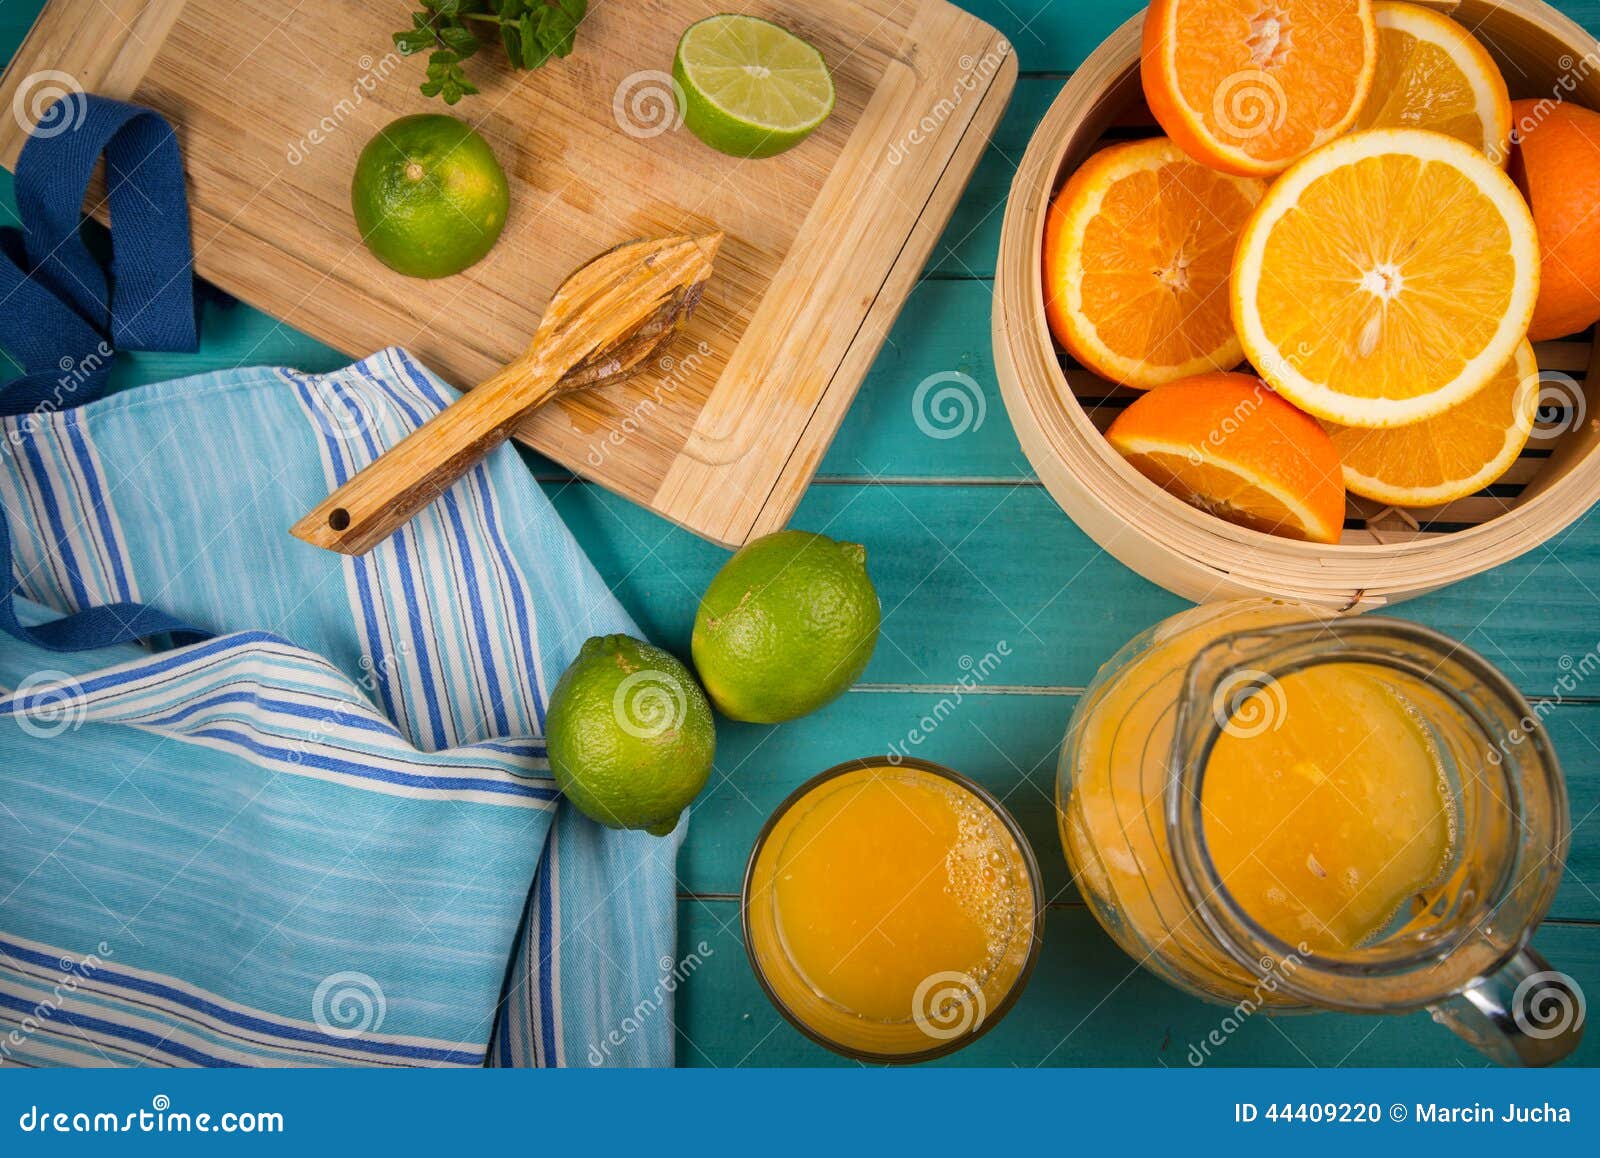 https://thumbs.dreamstime.com/z/homemade-orange-lemon-juice-fresh-organic-preparation-rustic-wooden-kitchen-table-vivid-colour-blue-background-44409220.jpg